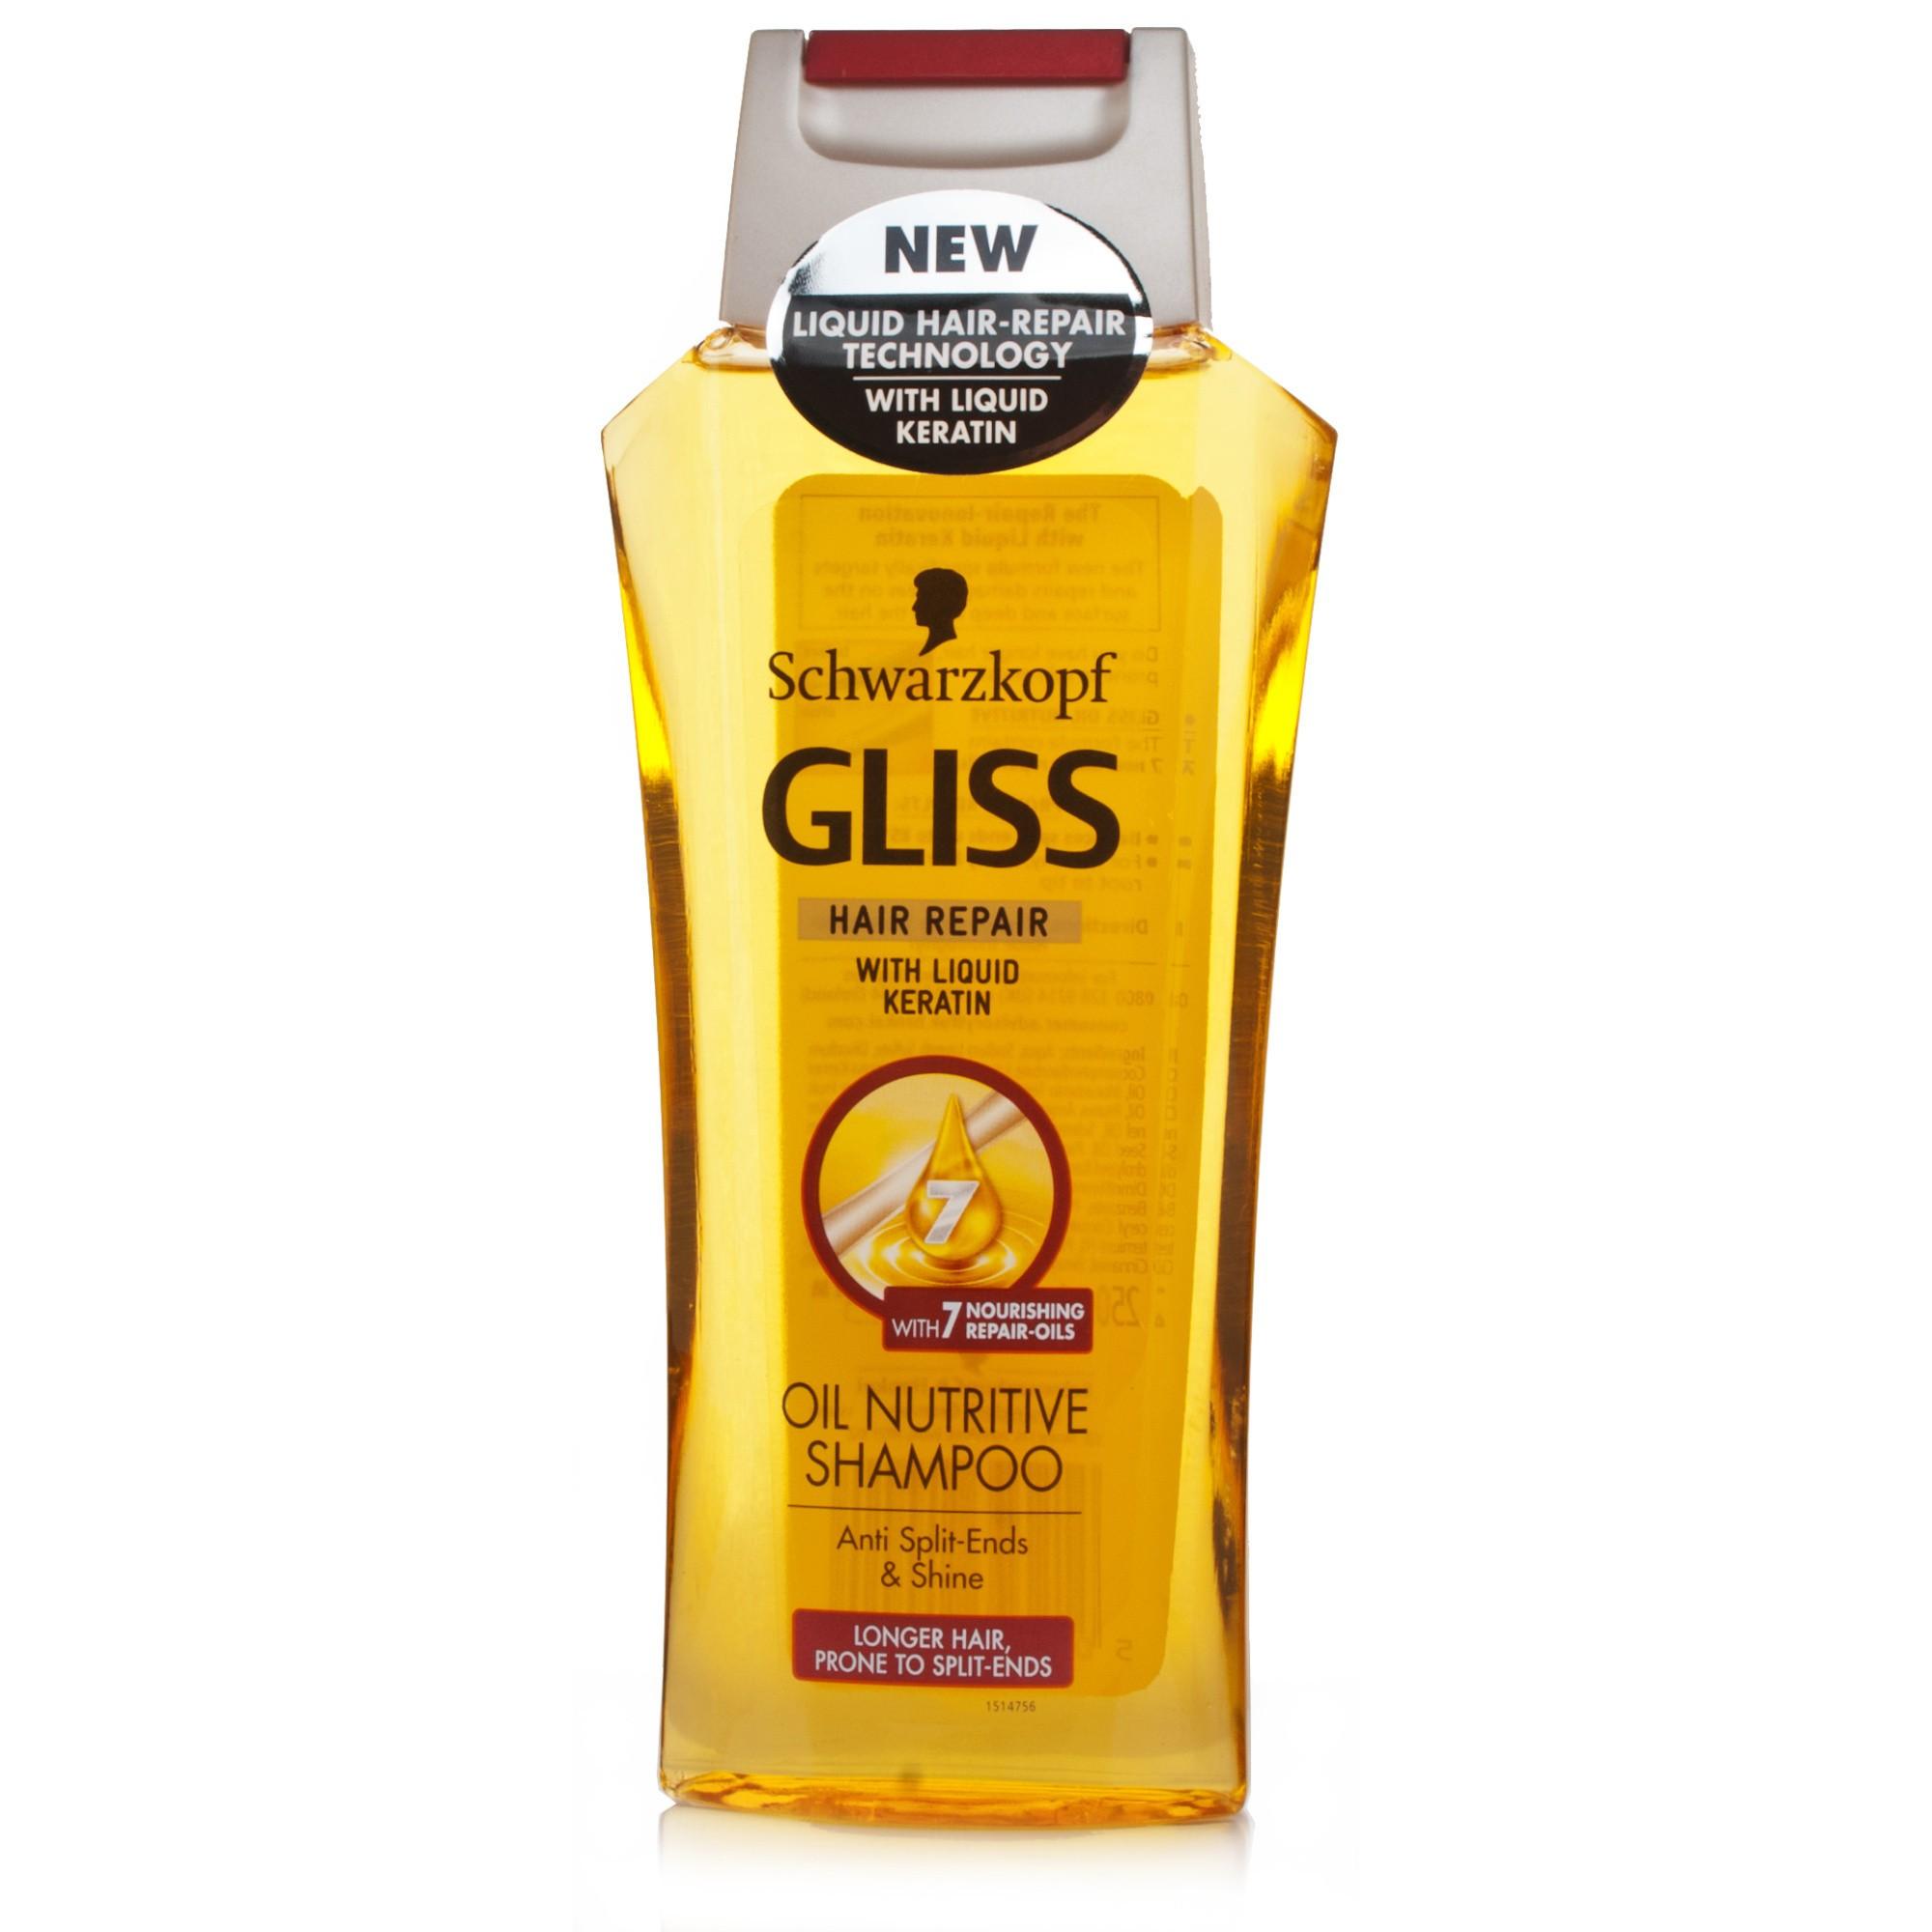 Schwarzkopf Gliss Shampoo For Free After Rebate